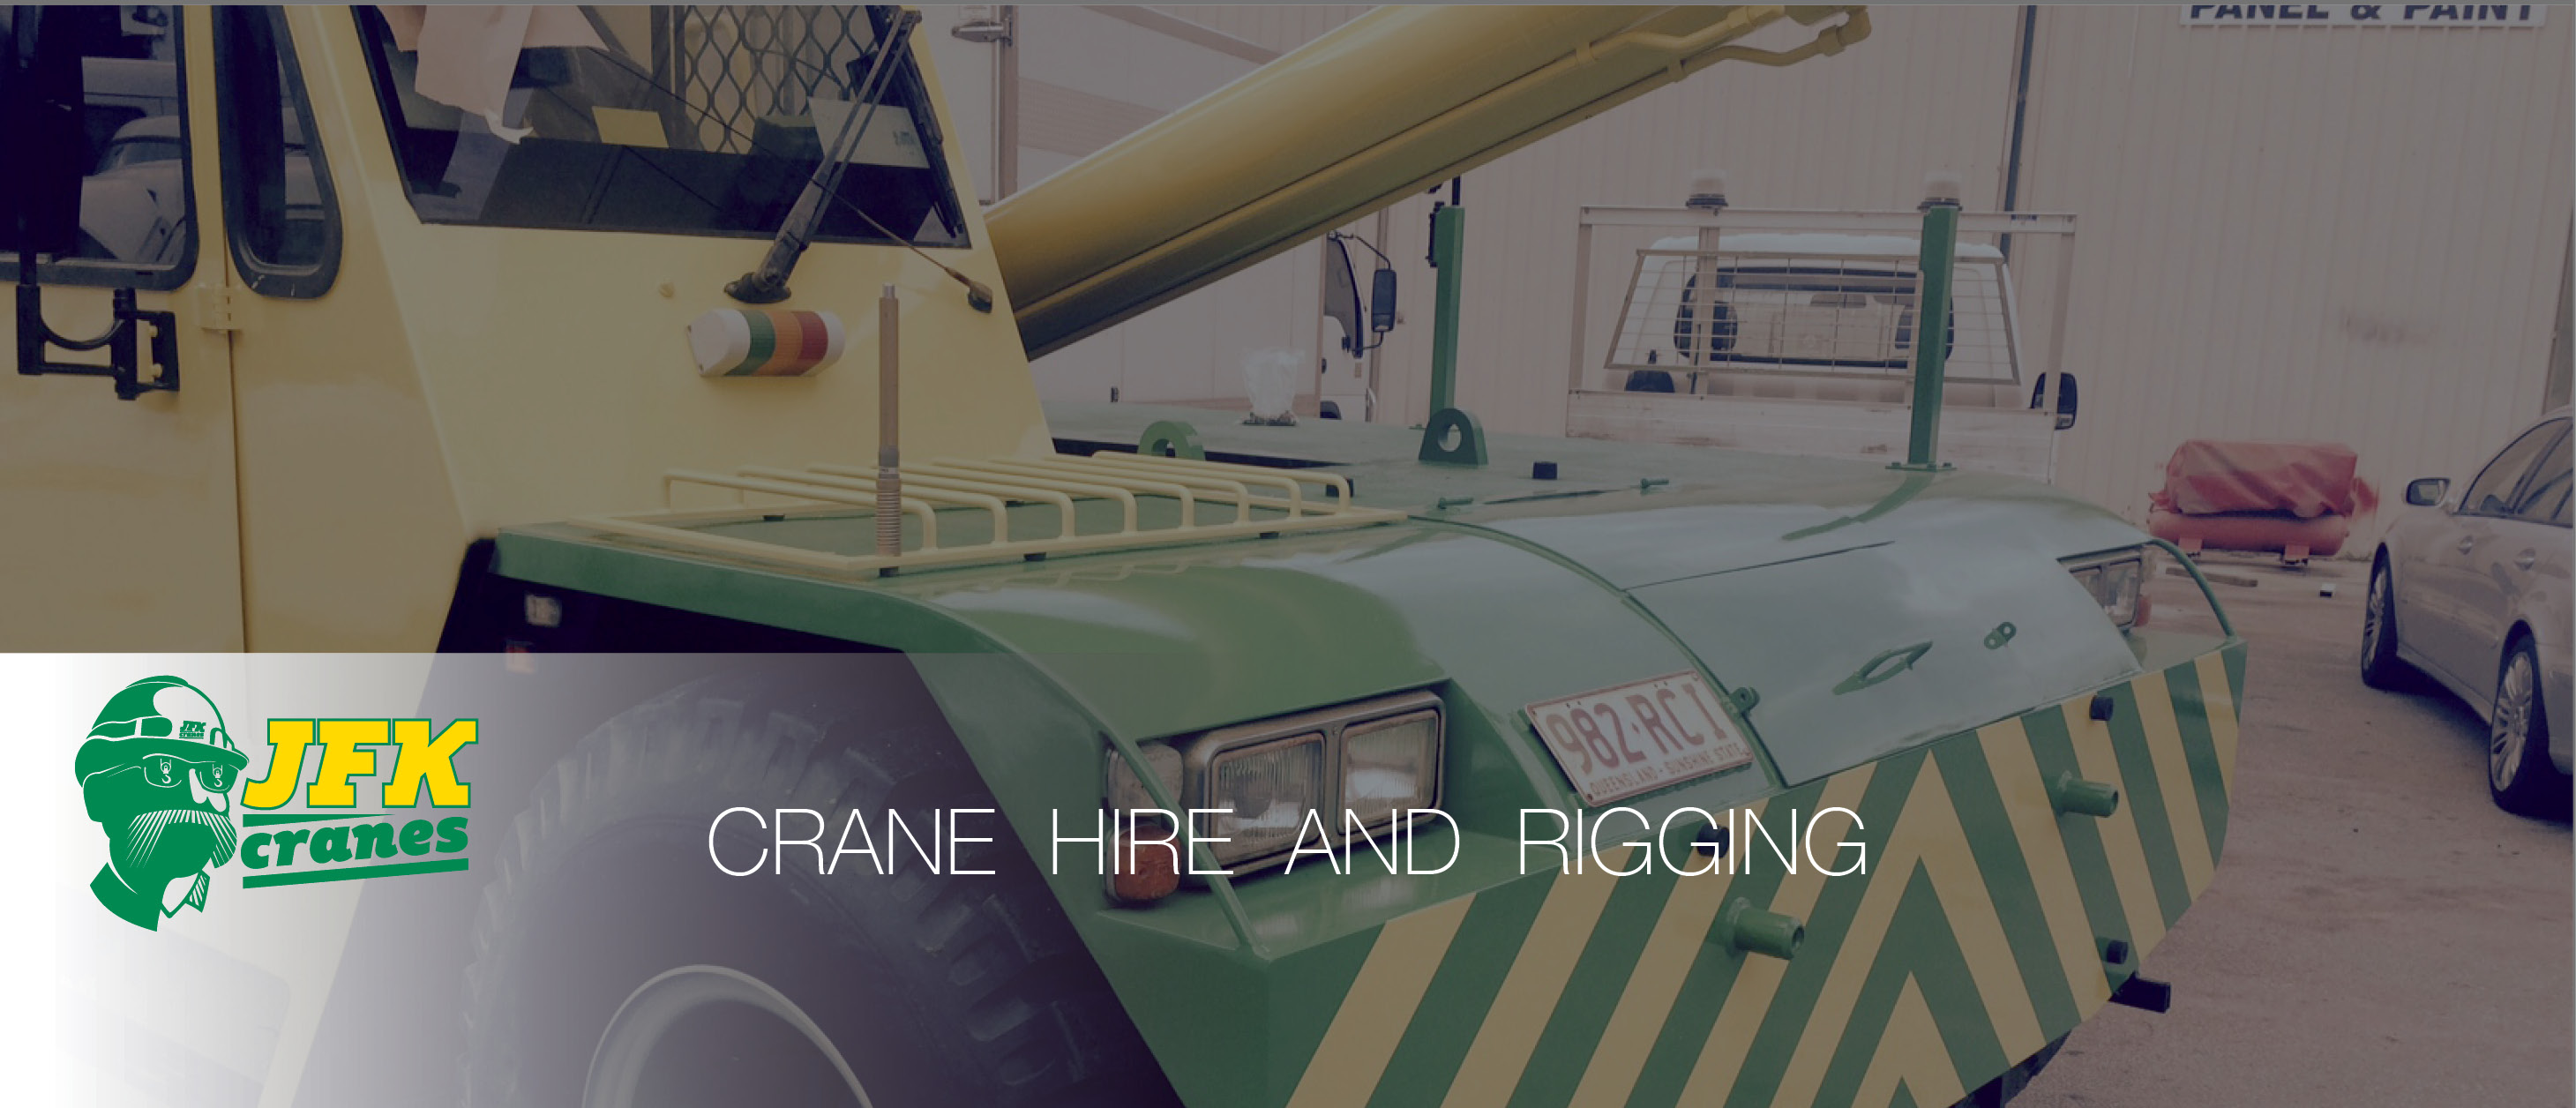 jfk-cranes-crane-hire-rigging-melbourne-25t-franna-slider-b